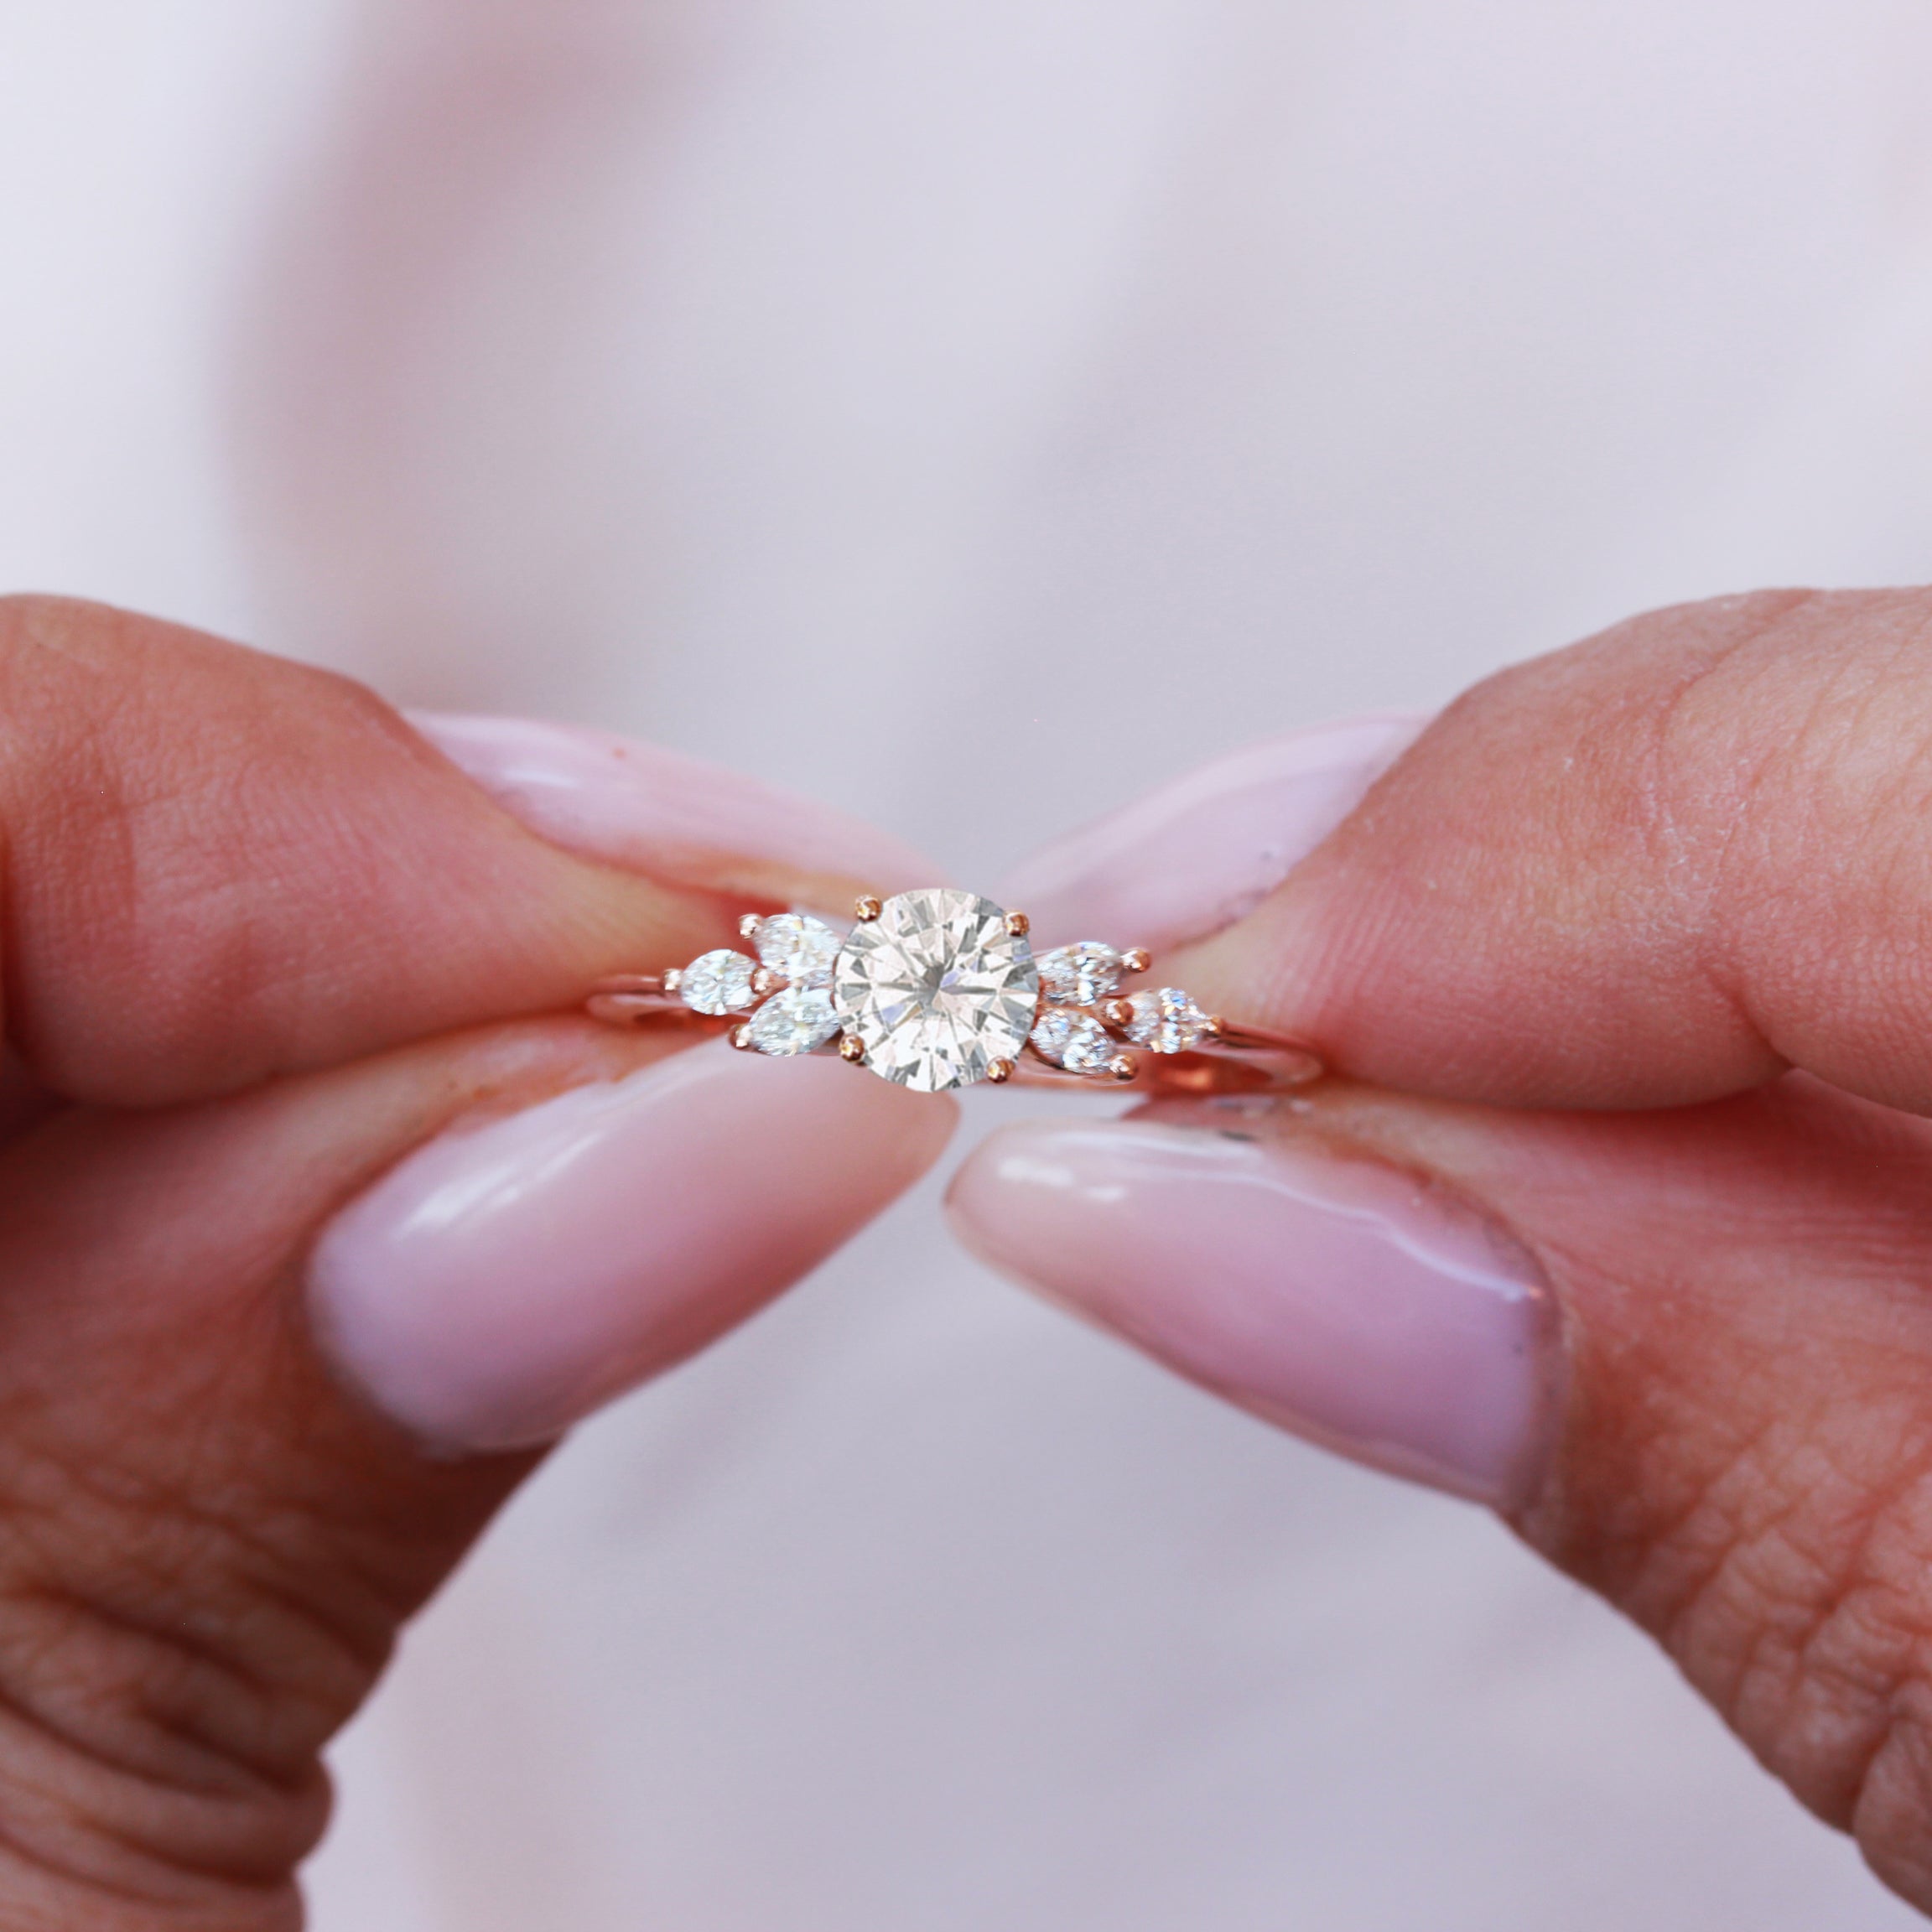 Round diamond engagement ring, "Penelope"